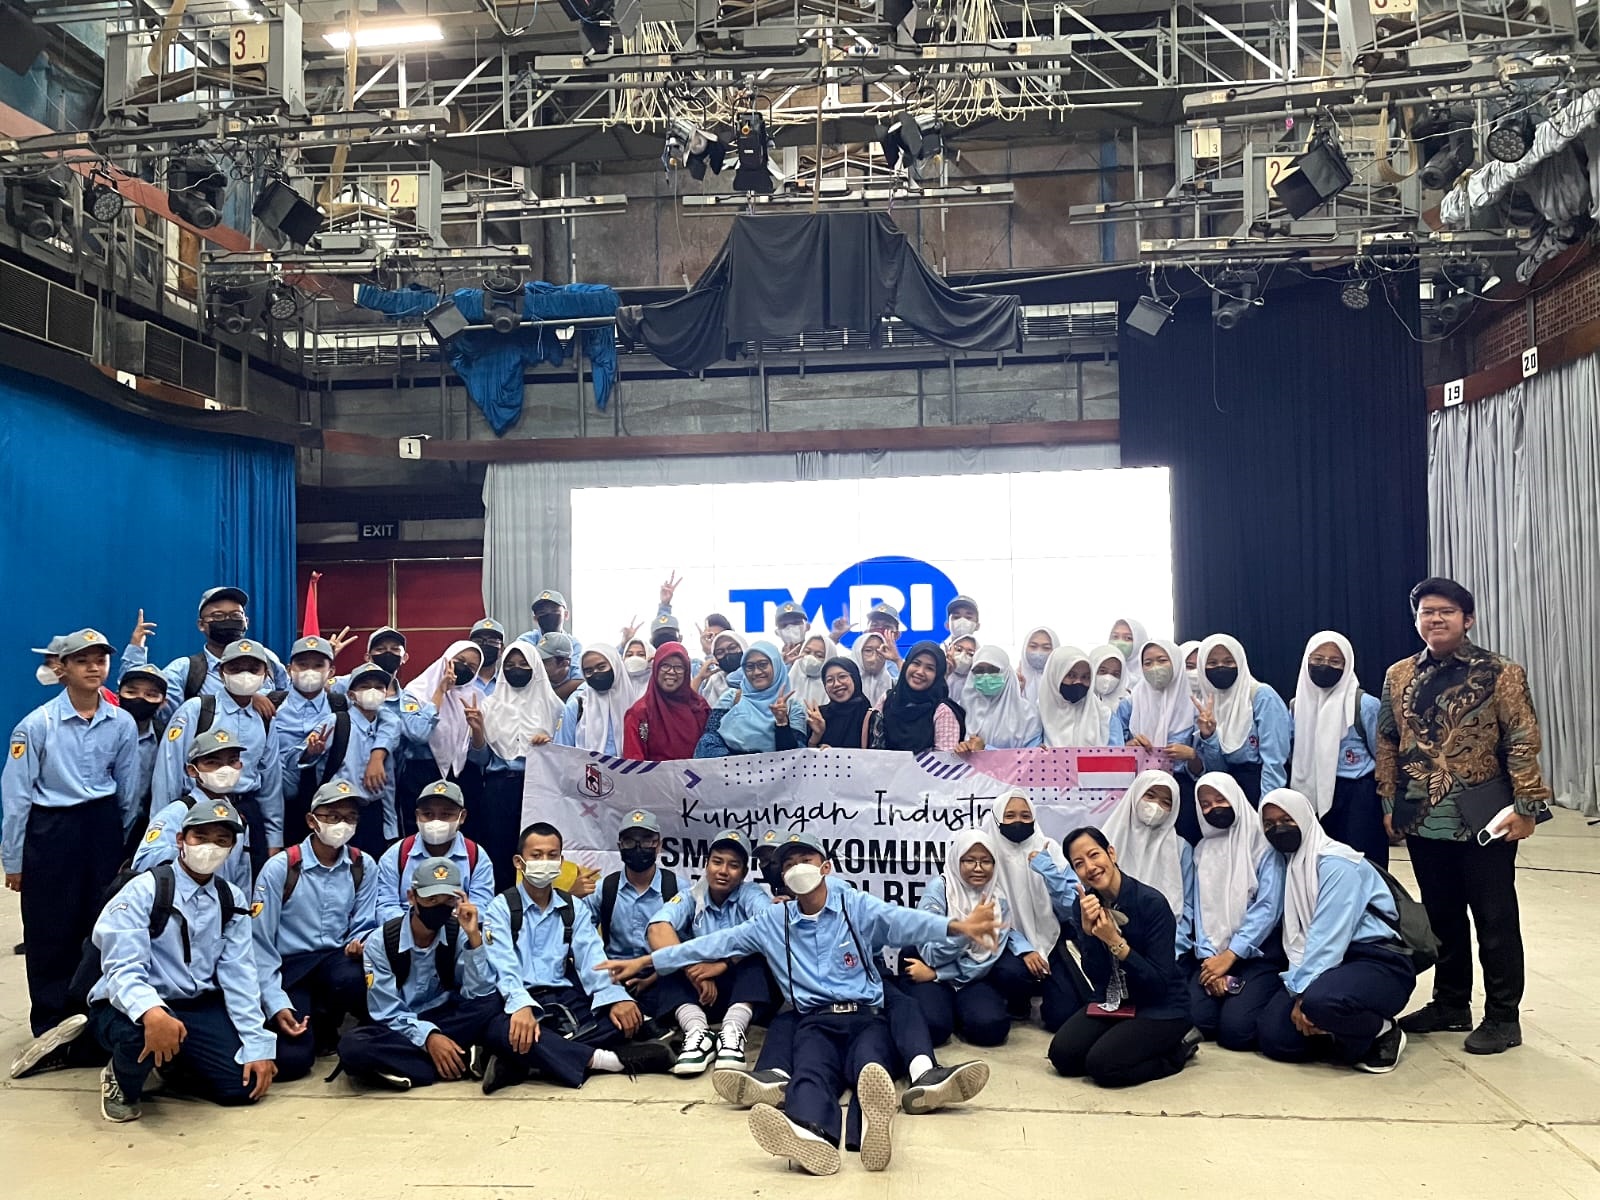 Kunjungan Industri SMK Telekomunikasi Telesandi ke TVRI, Kuatkan Tekad Generasi Muda Ikut Jaga Persatuan dan Kesatuan Bangsa